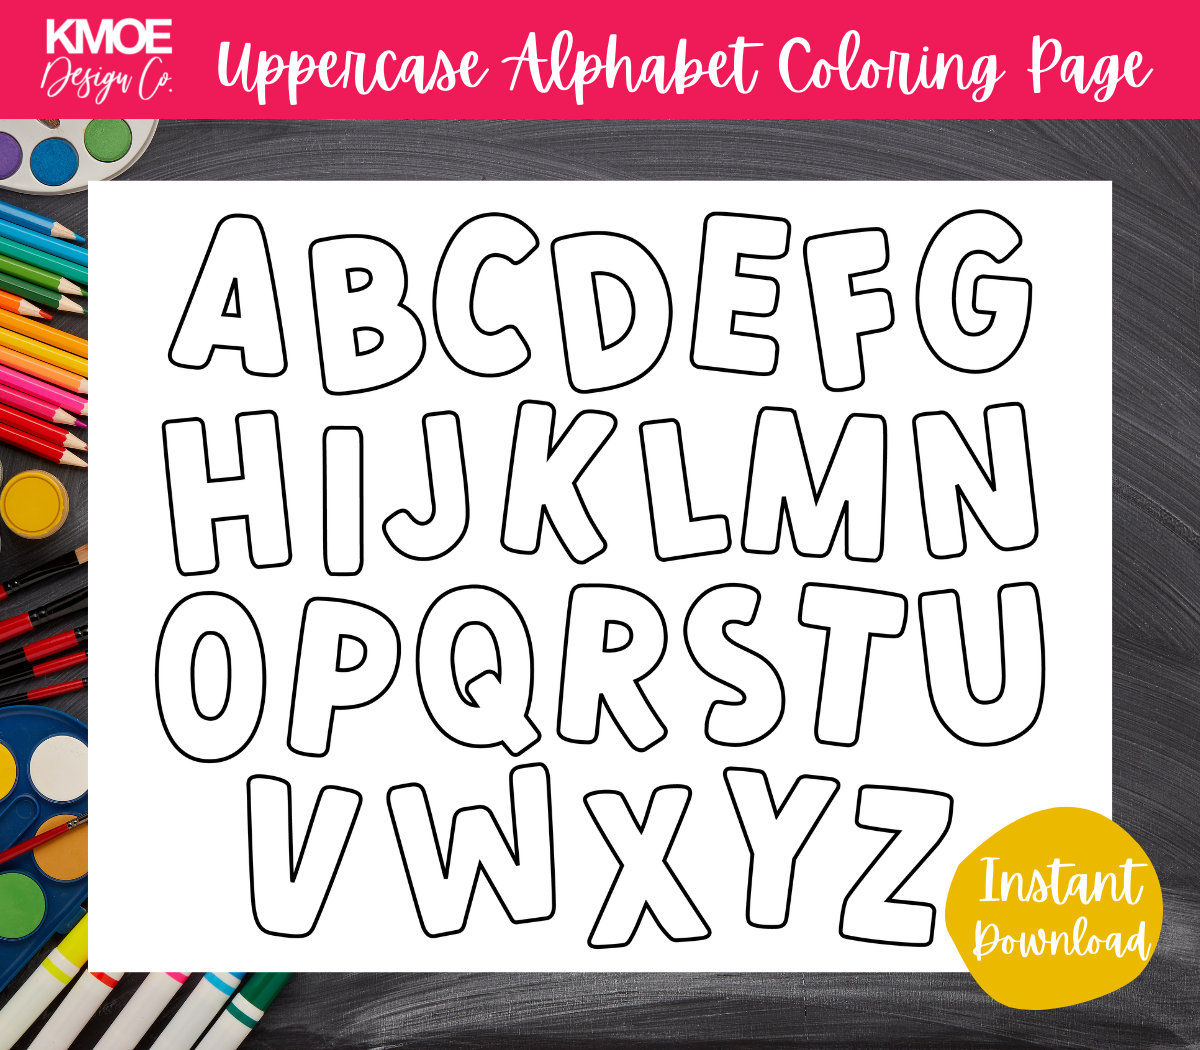 Printable alphabet coloring pages for kids abcs coloring book preschool homeschool kindergarten daycare instant download digital download instant download